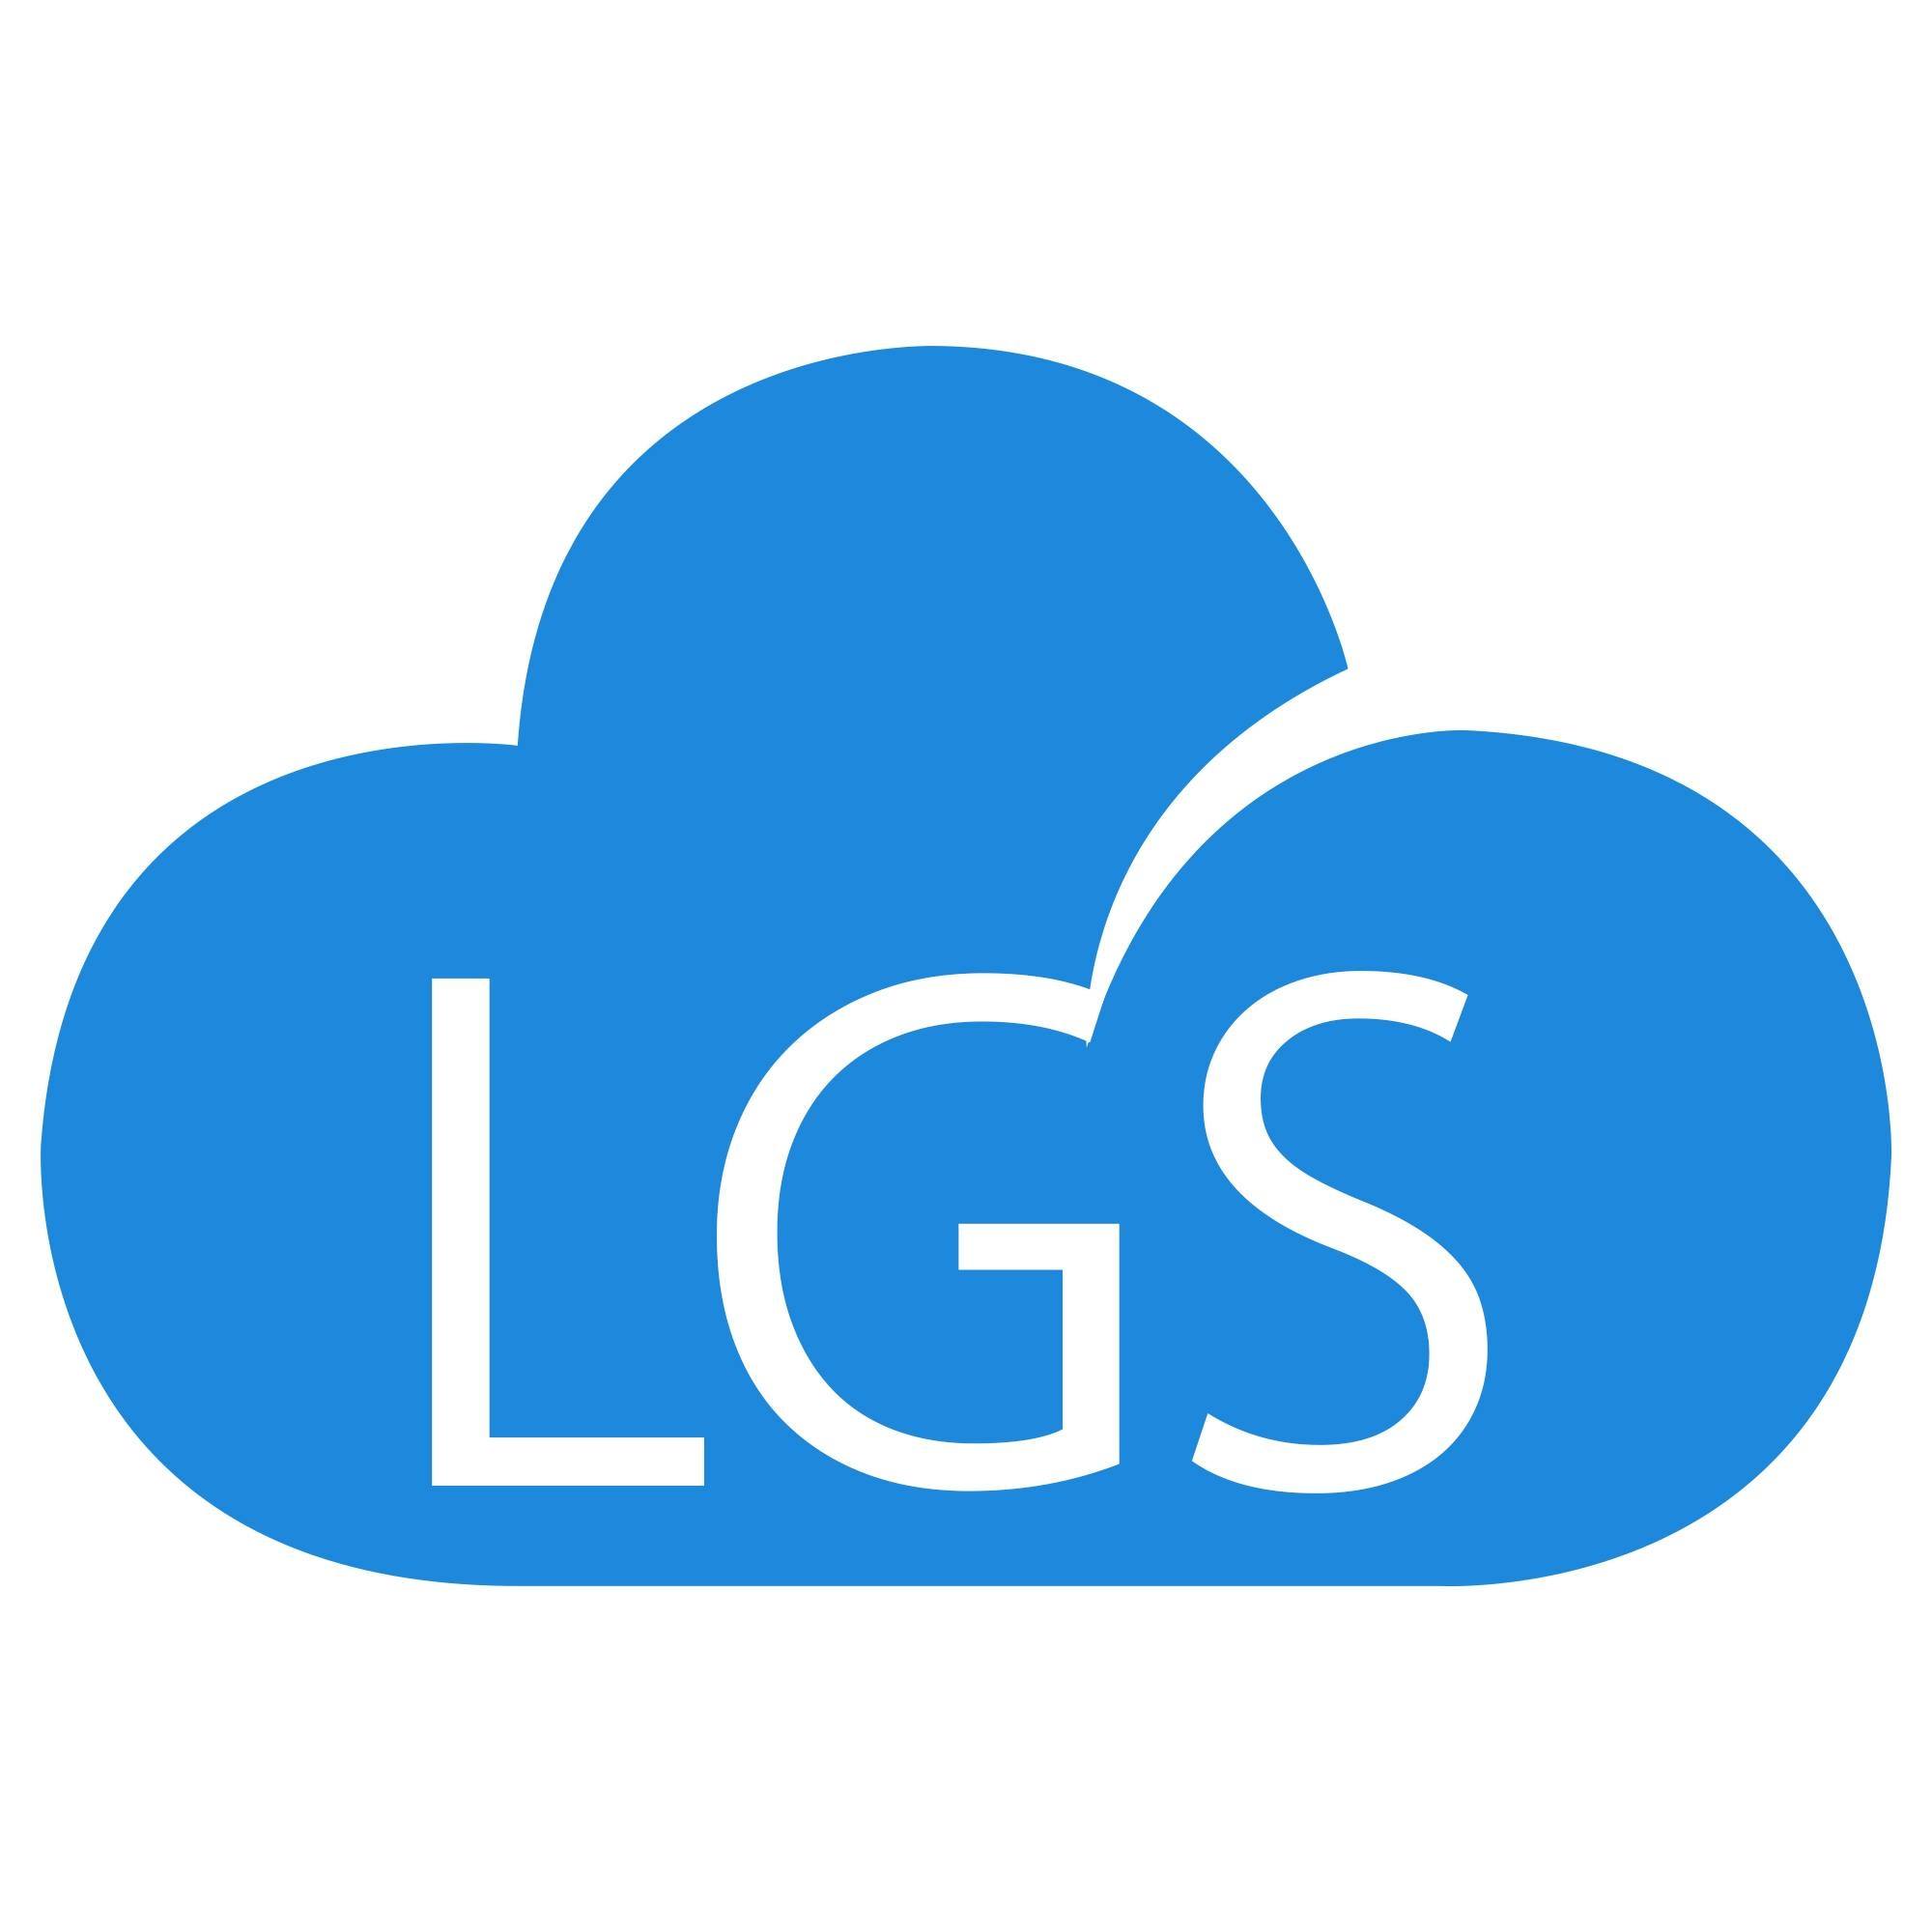 Business logo of Cloud LGS